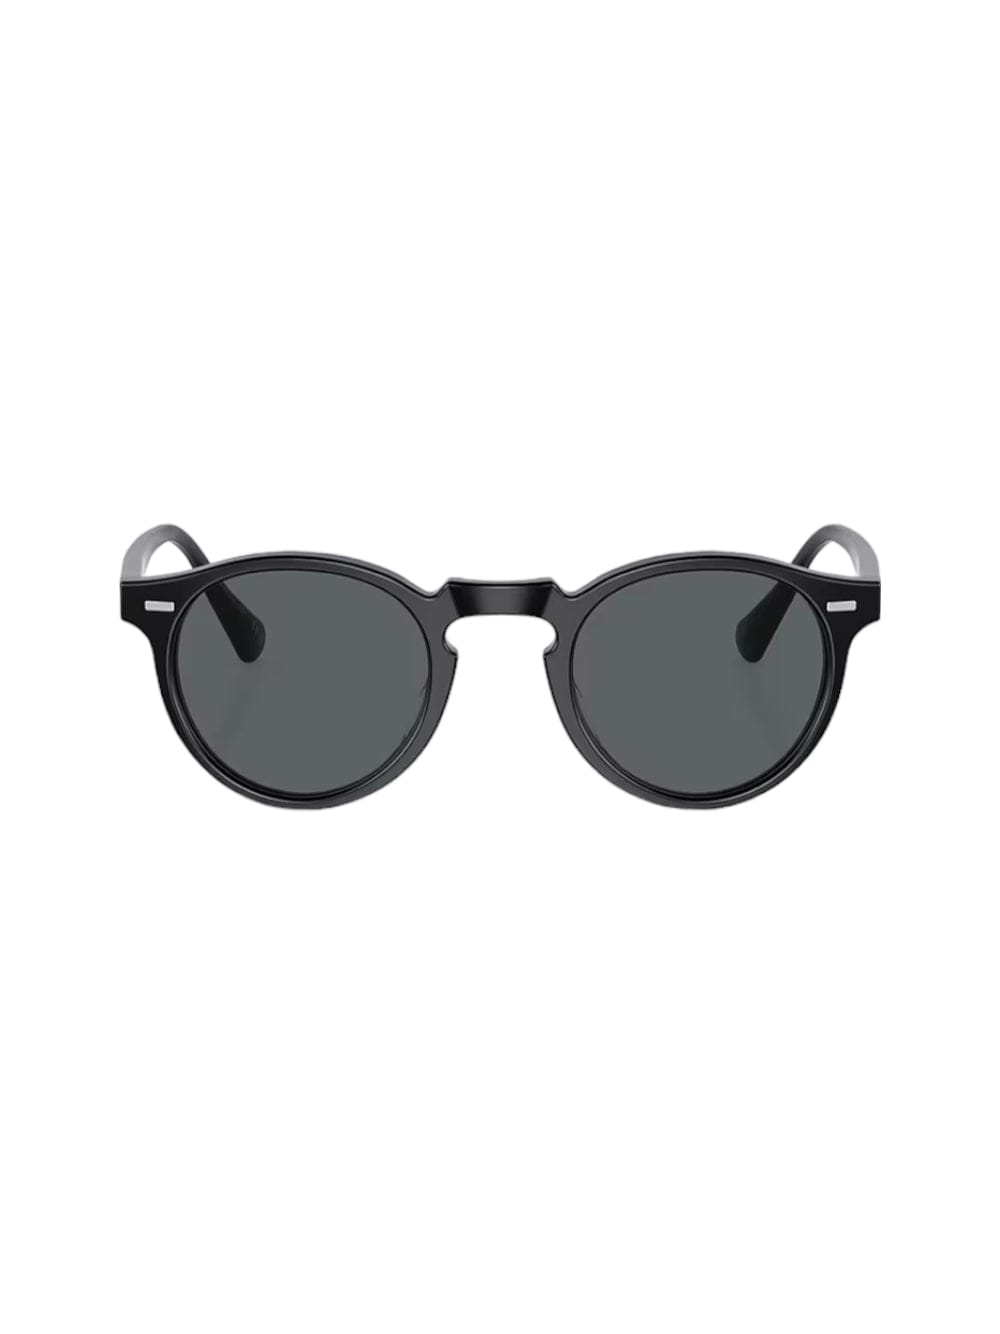 Shop Oliver Peoples Gregory Peck Sun Sunglasses